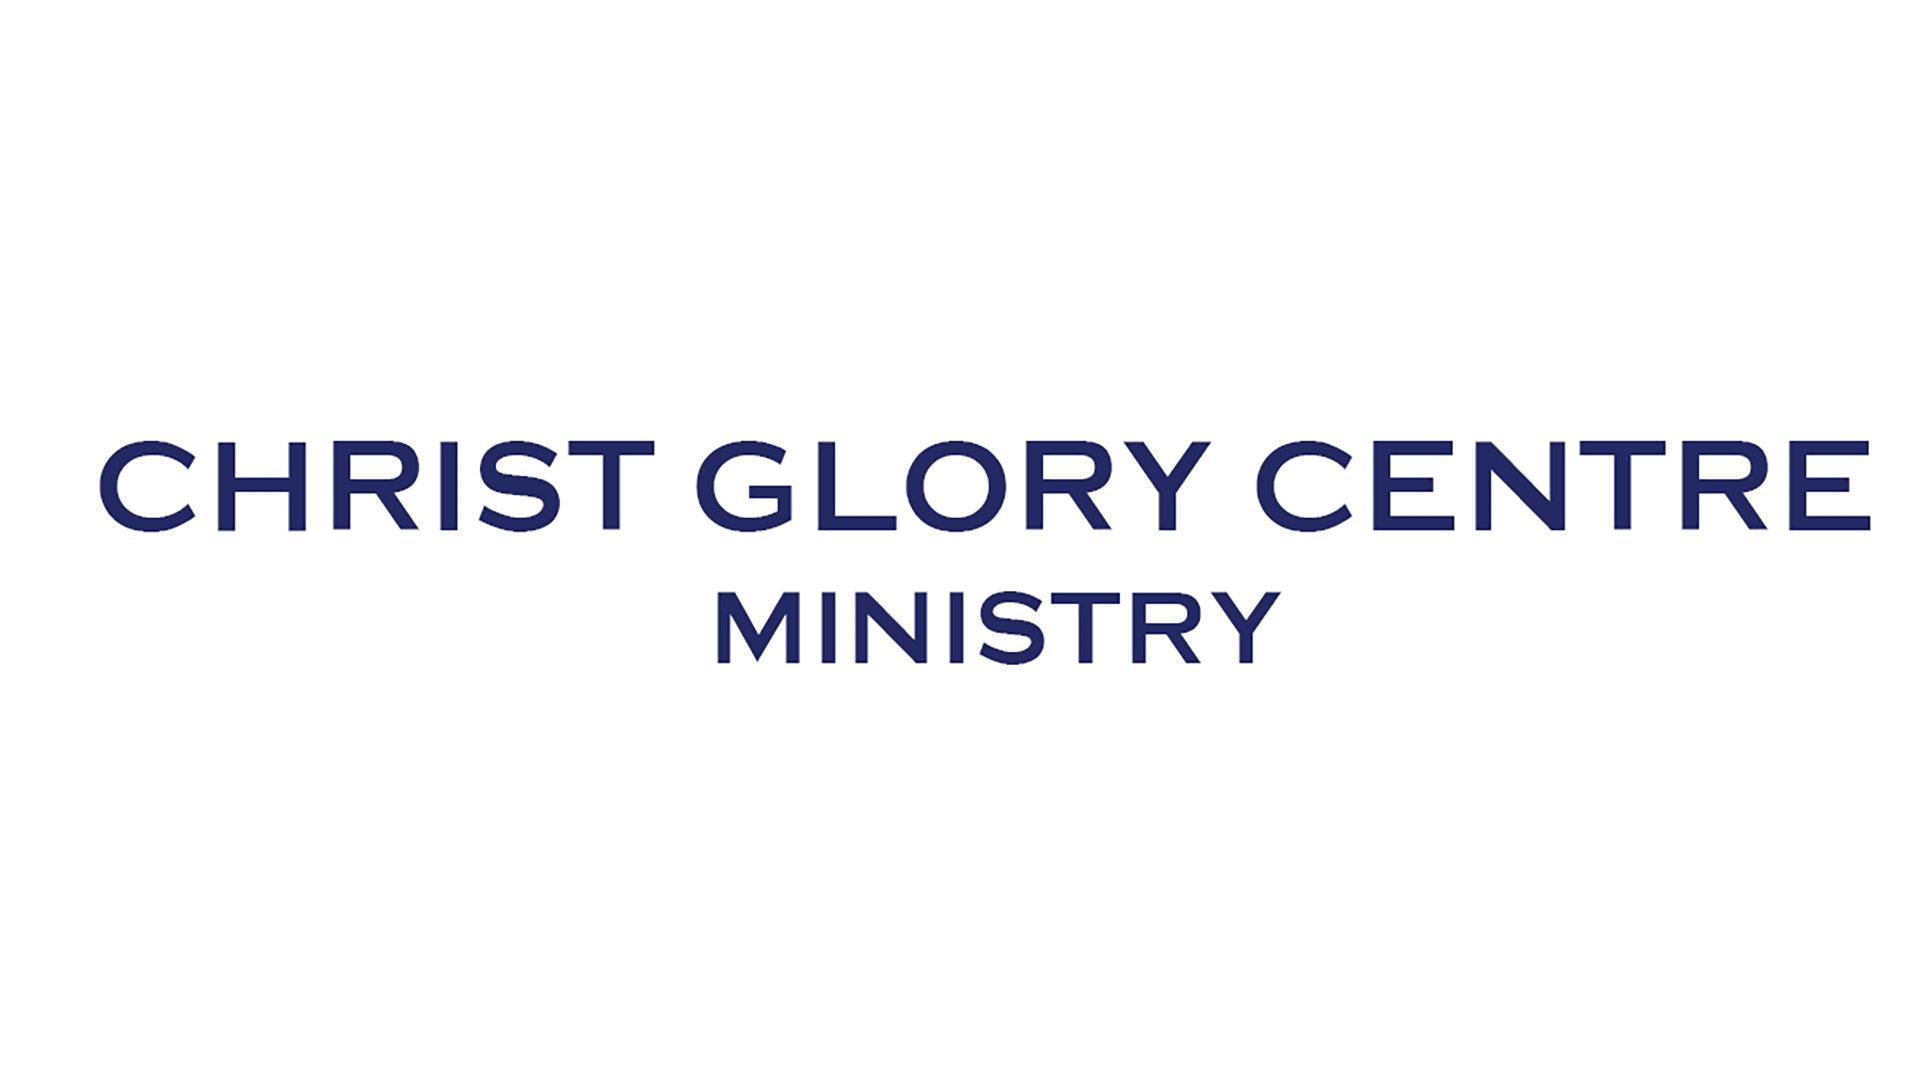 Christ Glory Centre Ministry logo